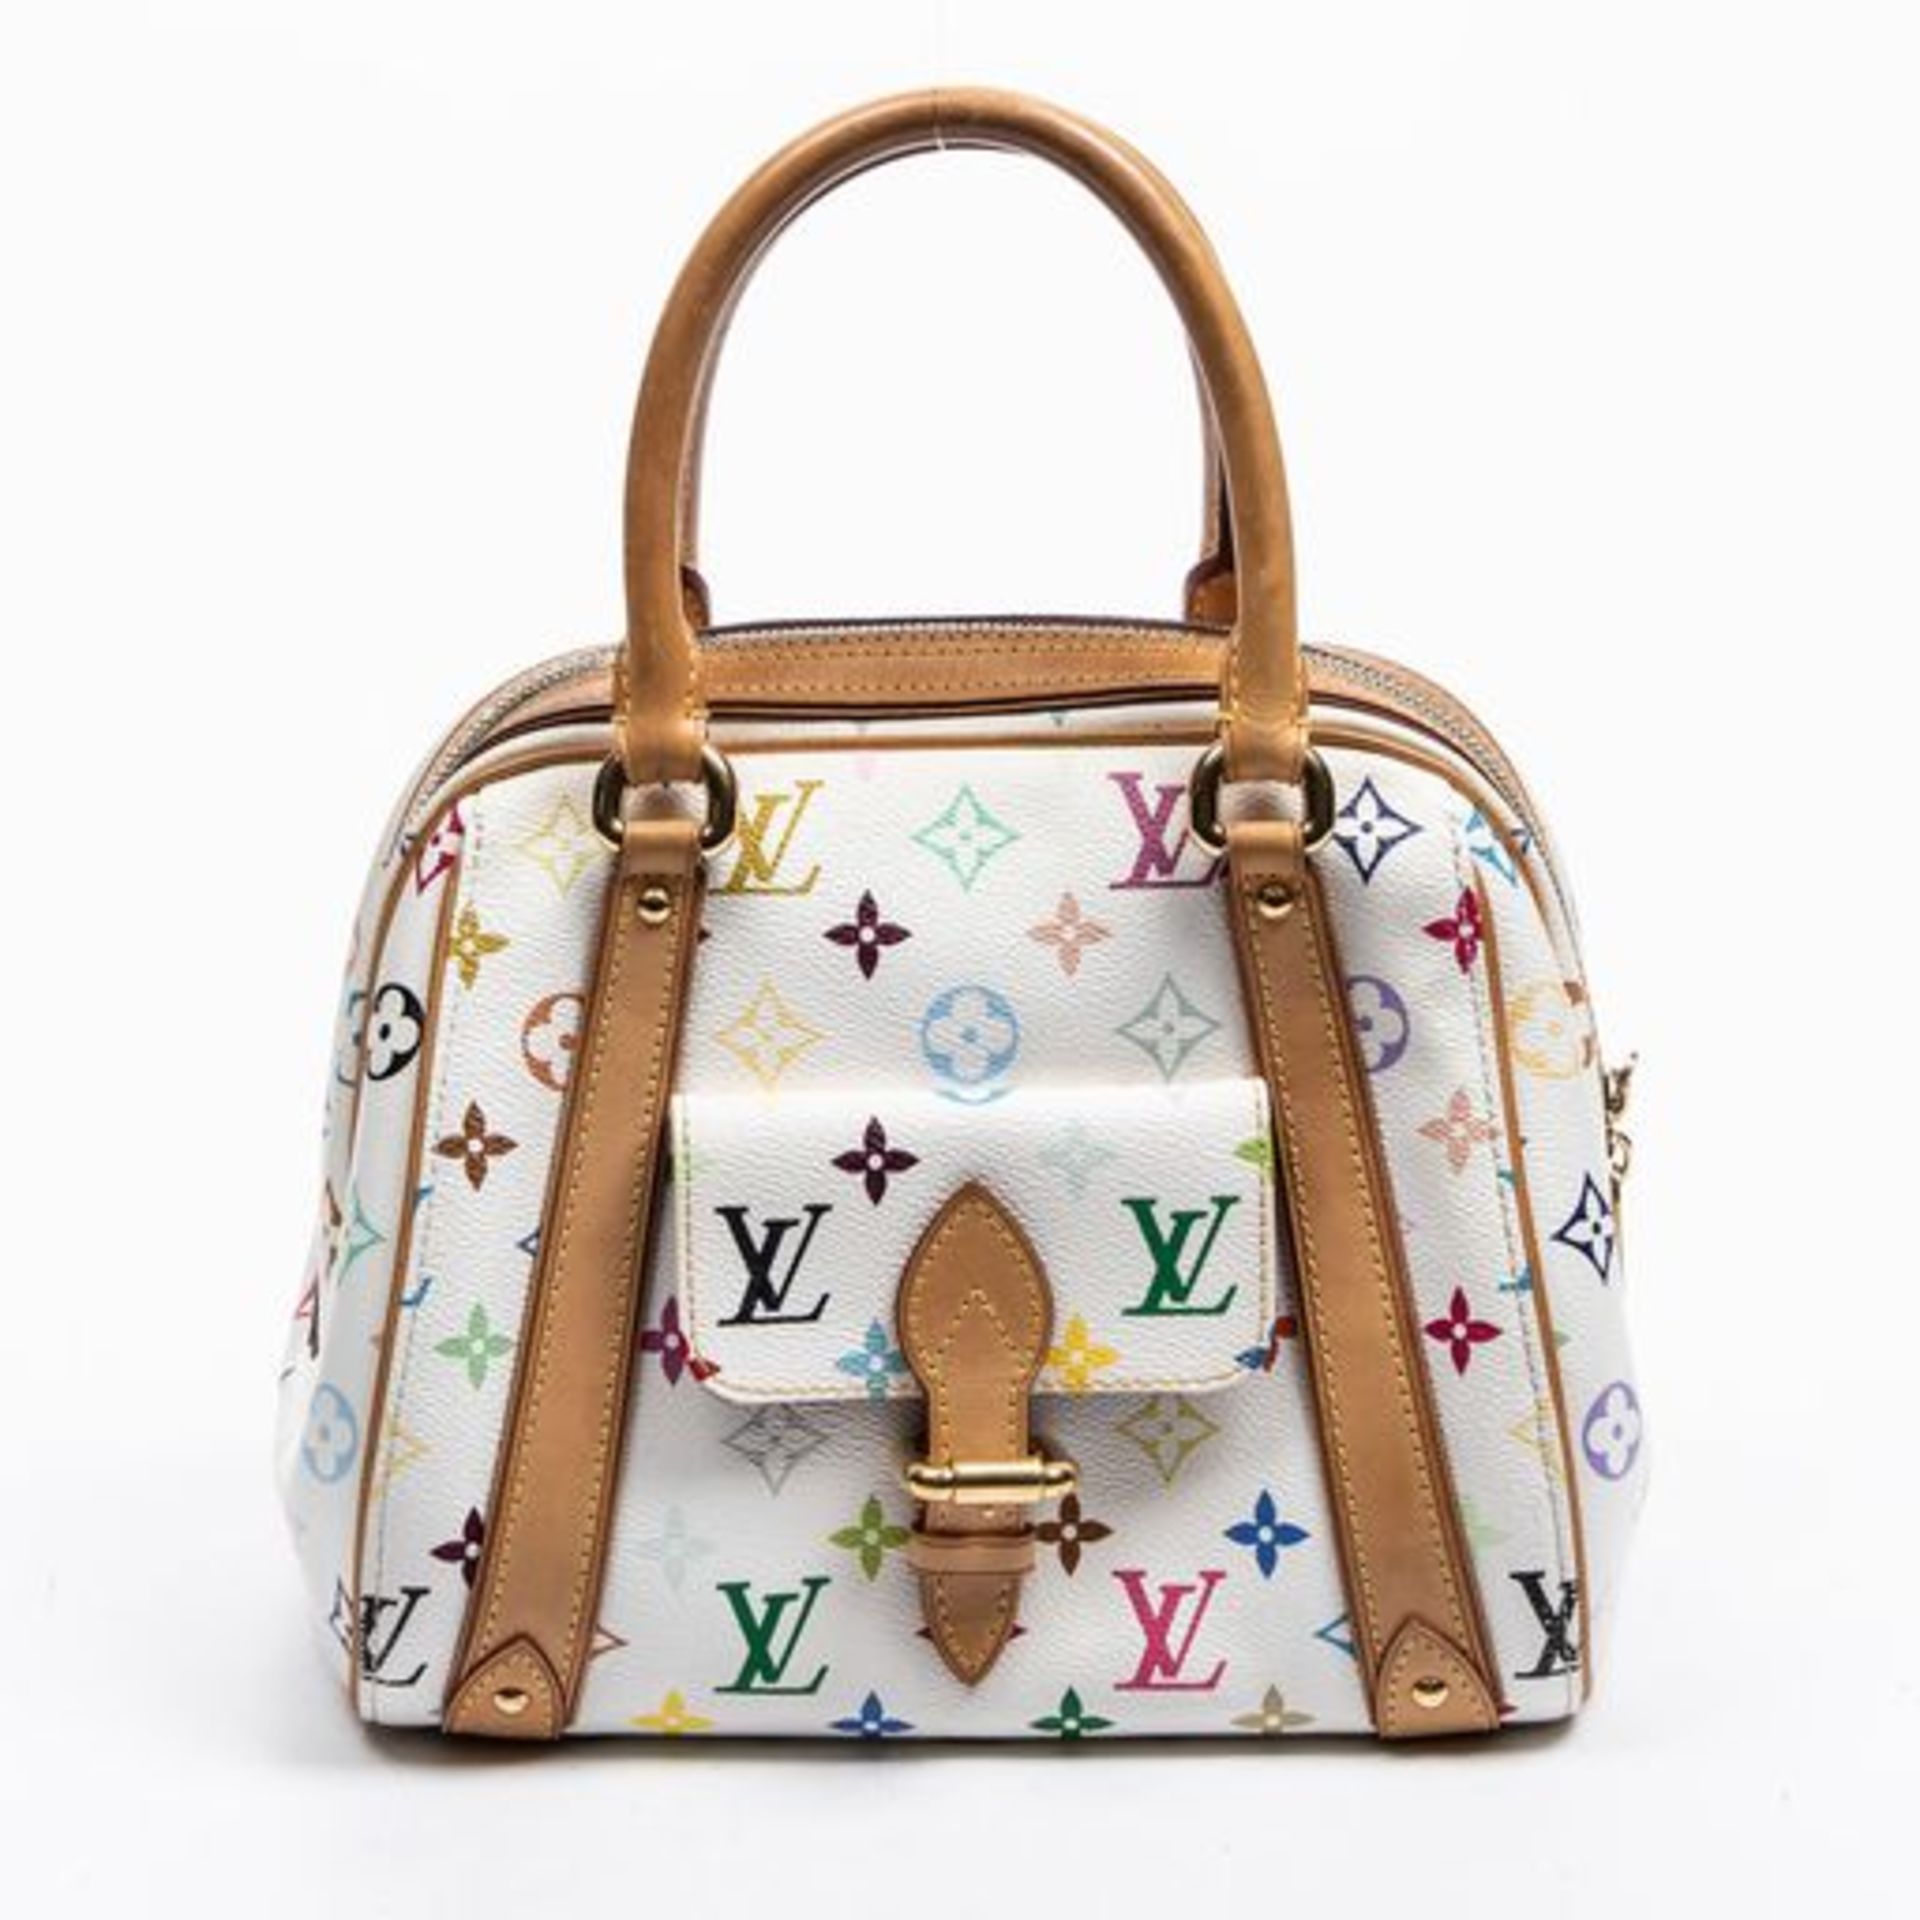 RRP £1,850.00 Lot To Contain 1 Louis Vuitton Coated Canvas Priscilla Handbag In White - 27*22*18cm -